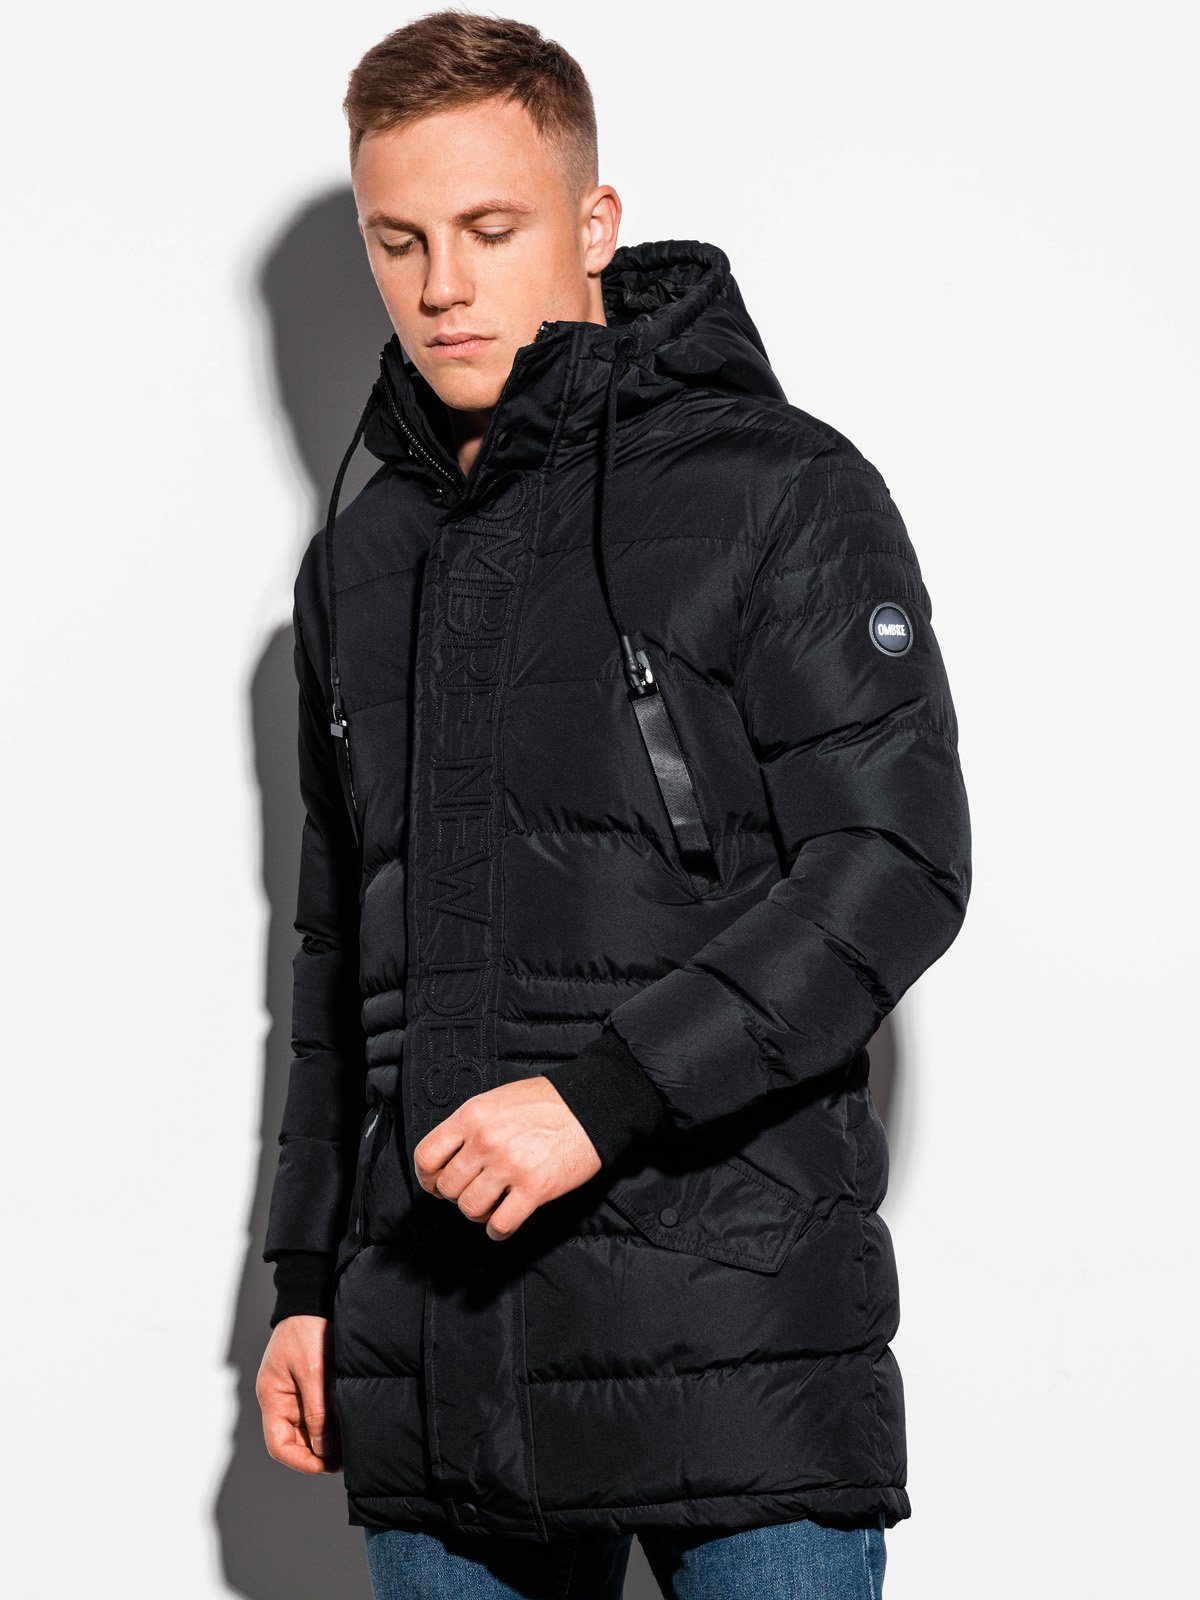 Men's winter jacket C411 - black | MODONE wholesale - Clothing For Men